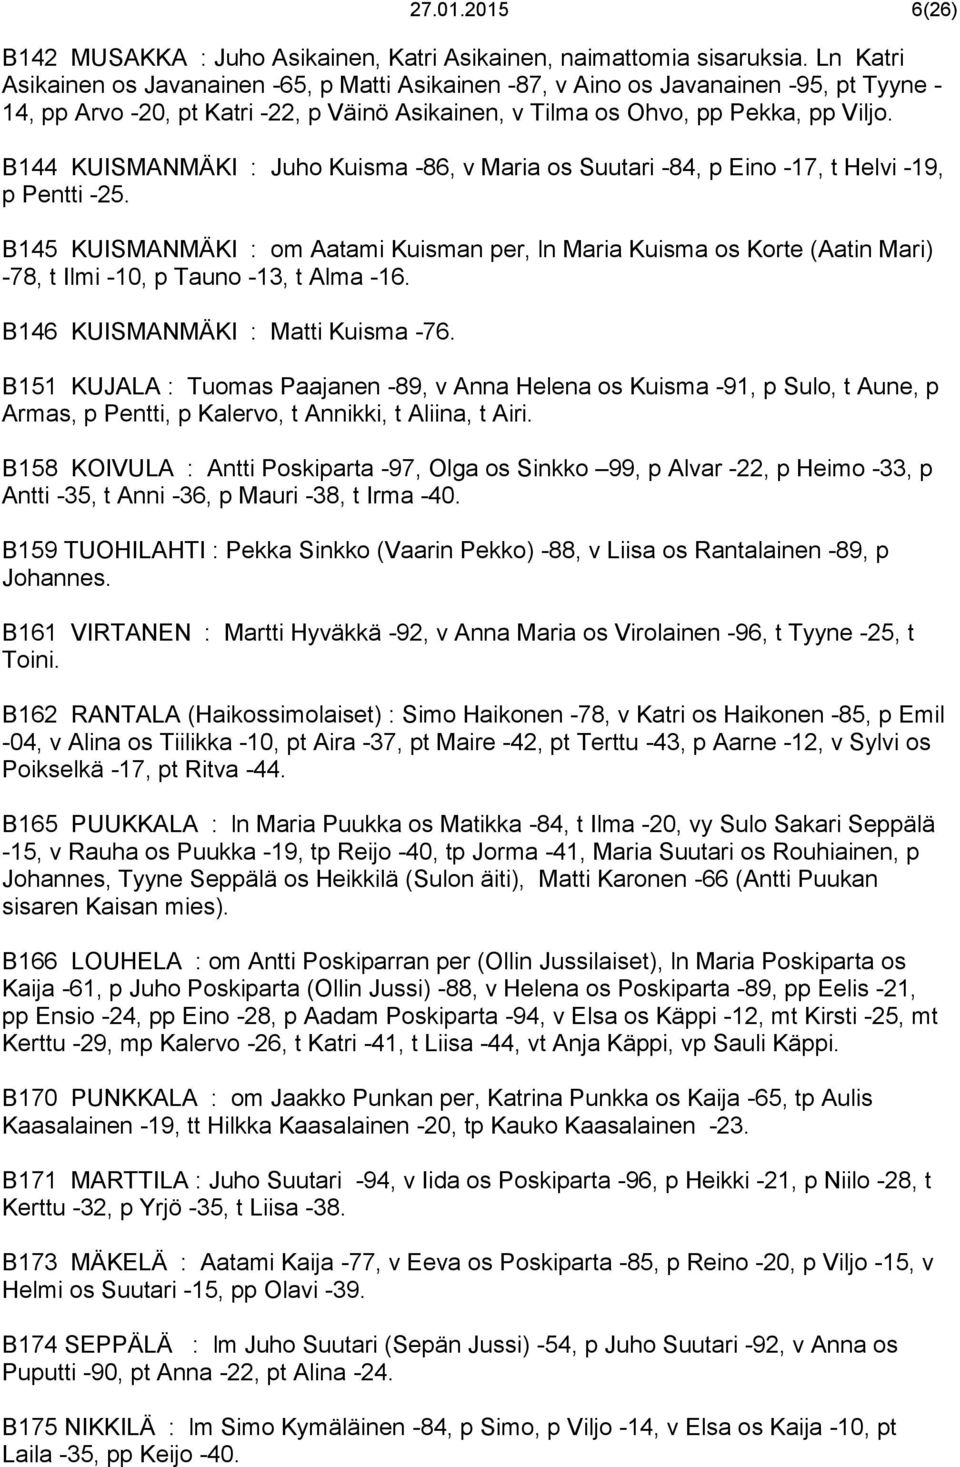 B144 KUISMANMÄKI : Juho Kuisma -86, v Maria os Suutari -84, p Eino -17, t Helvi -19, p Pentti -25.